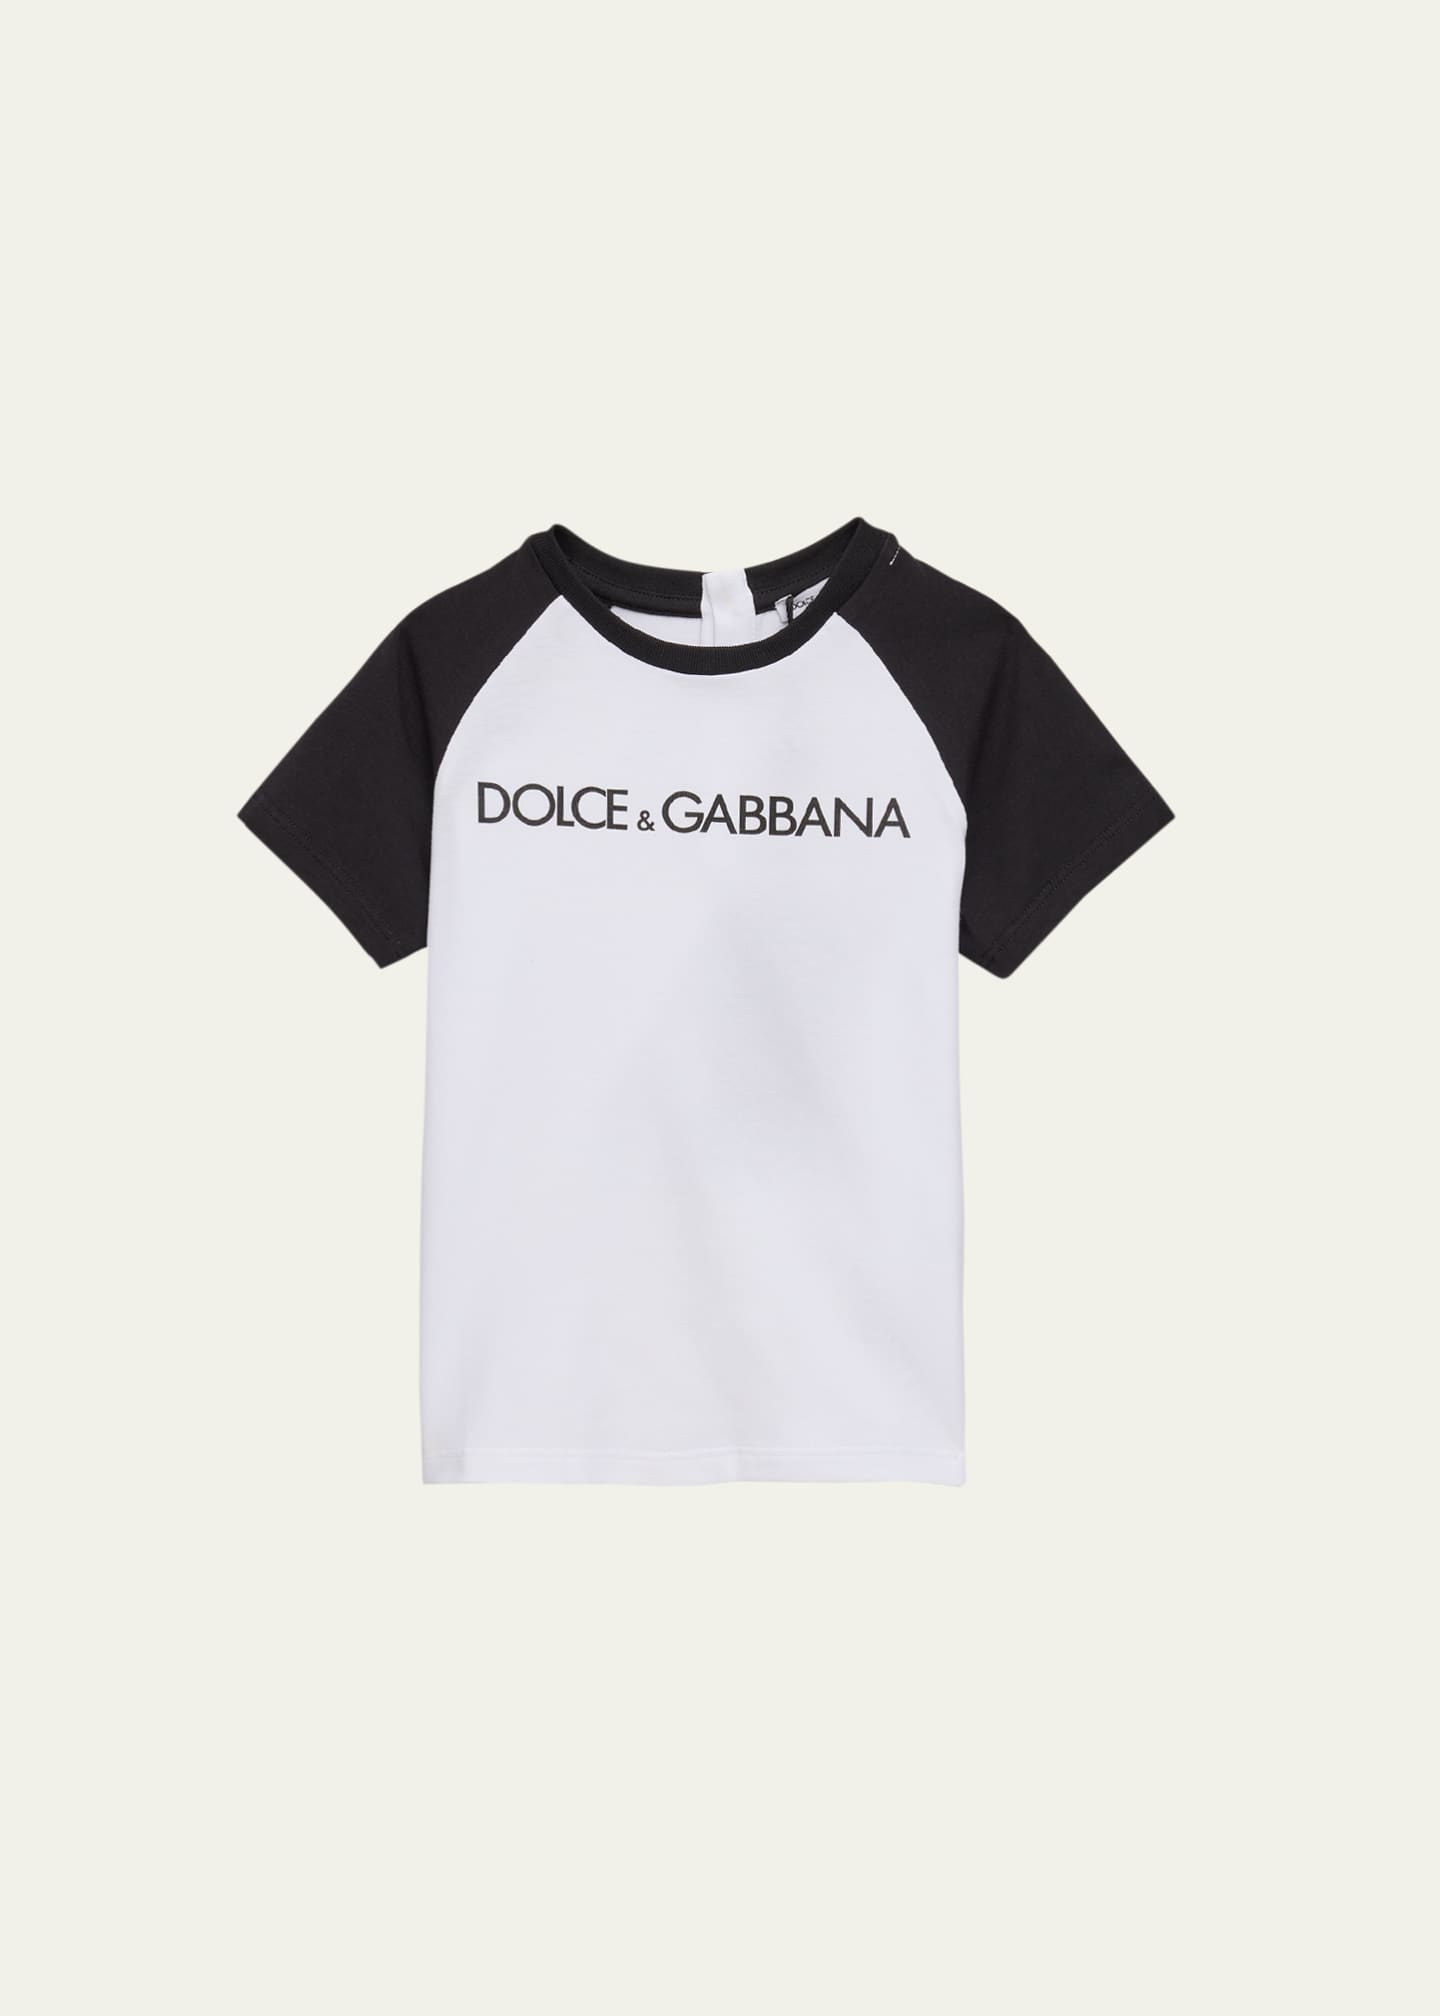 Dolce&Gabbana Kid's Logo-Print Baseball T-Shirt, Size 12M-30M